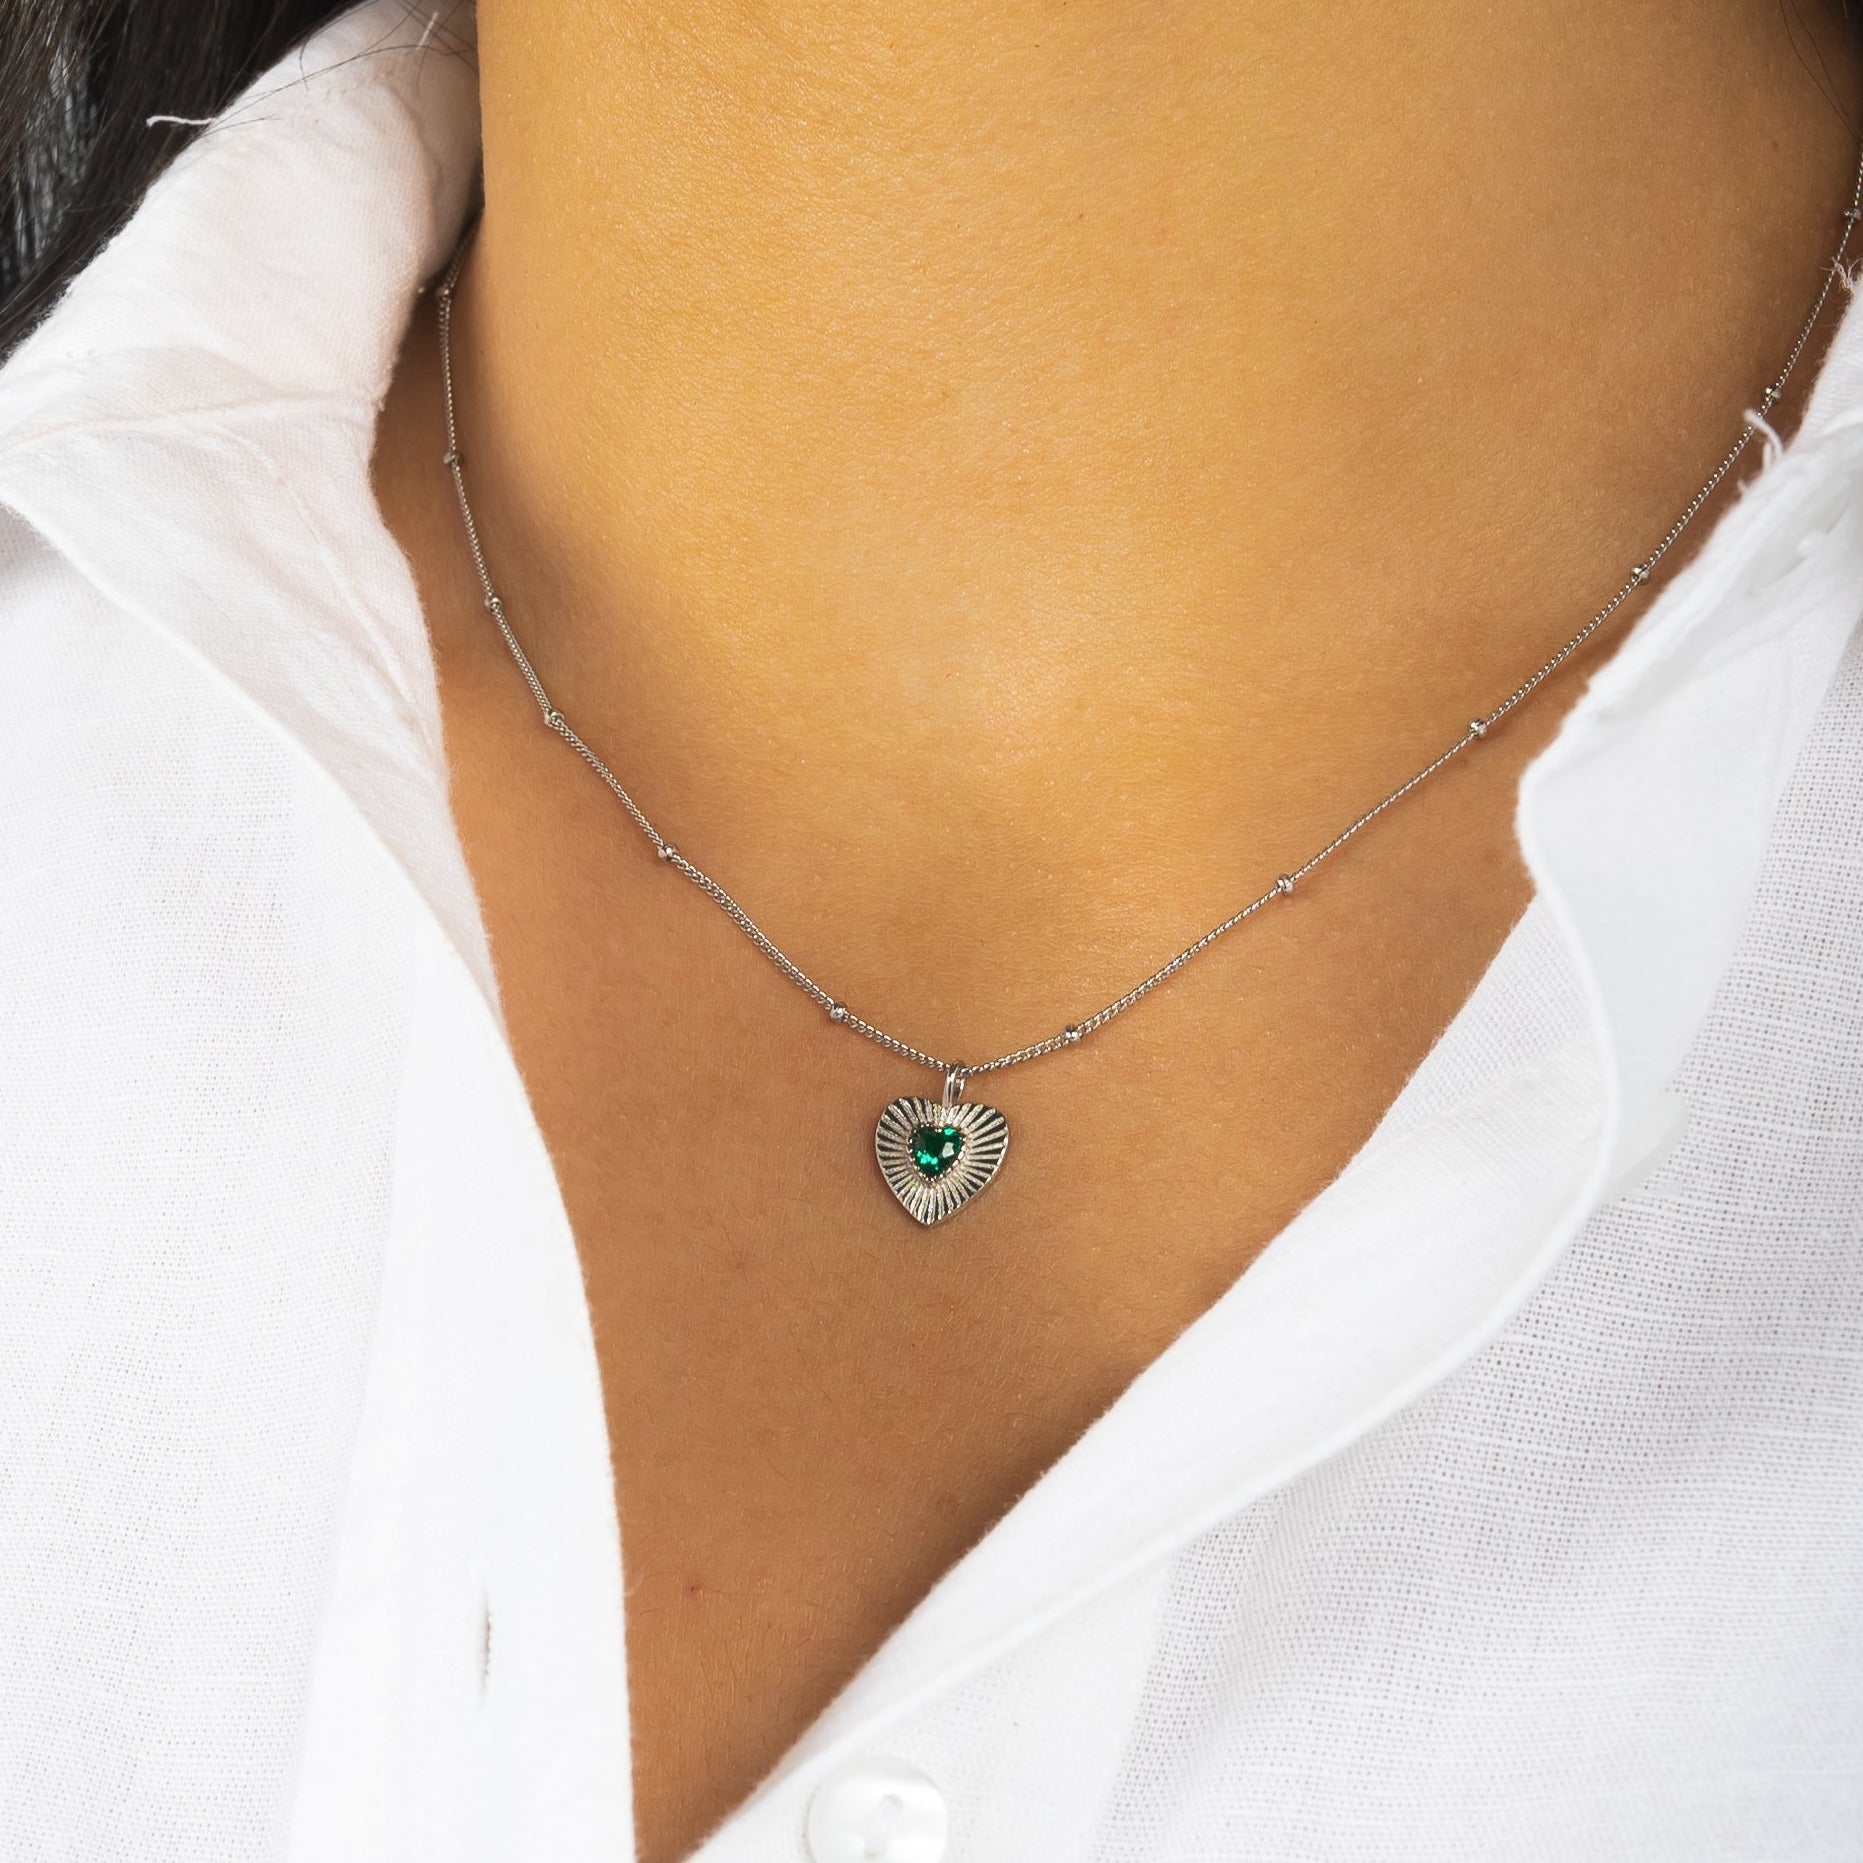 Green Heart Pendant Necklace - Silver